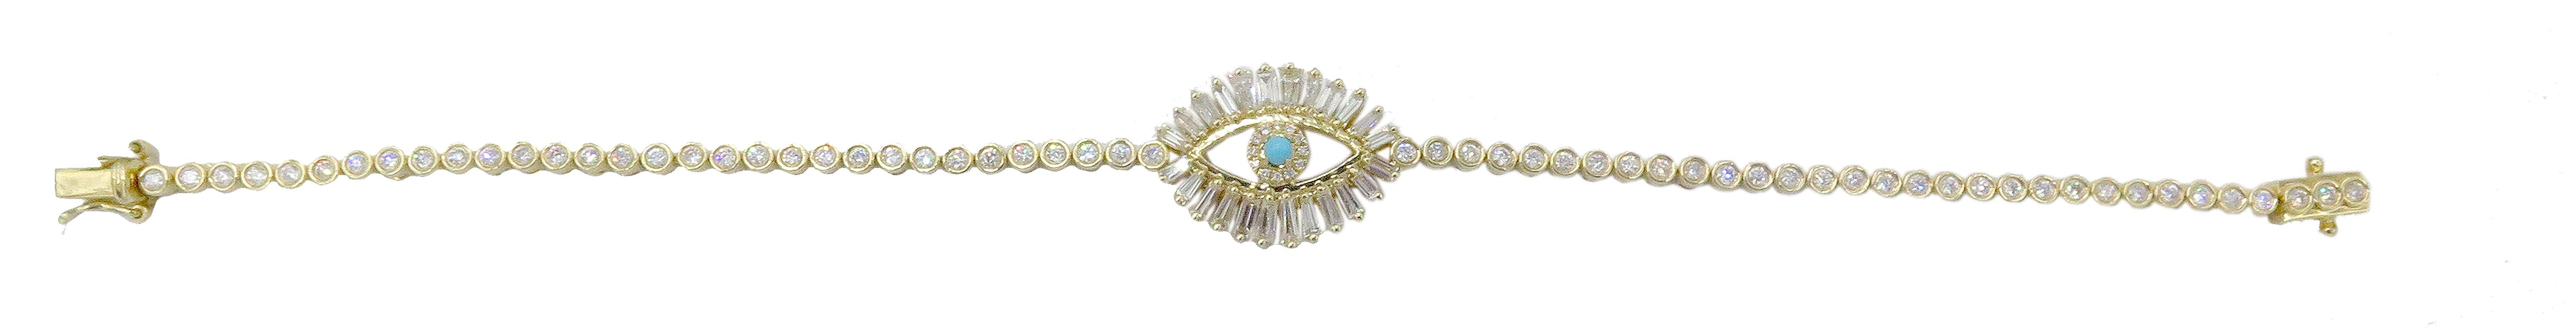 evil eye diamond tennis bracelet